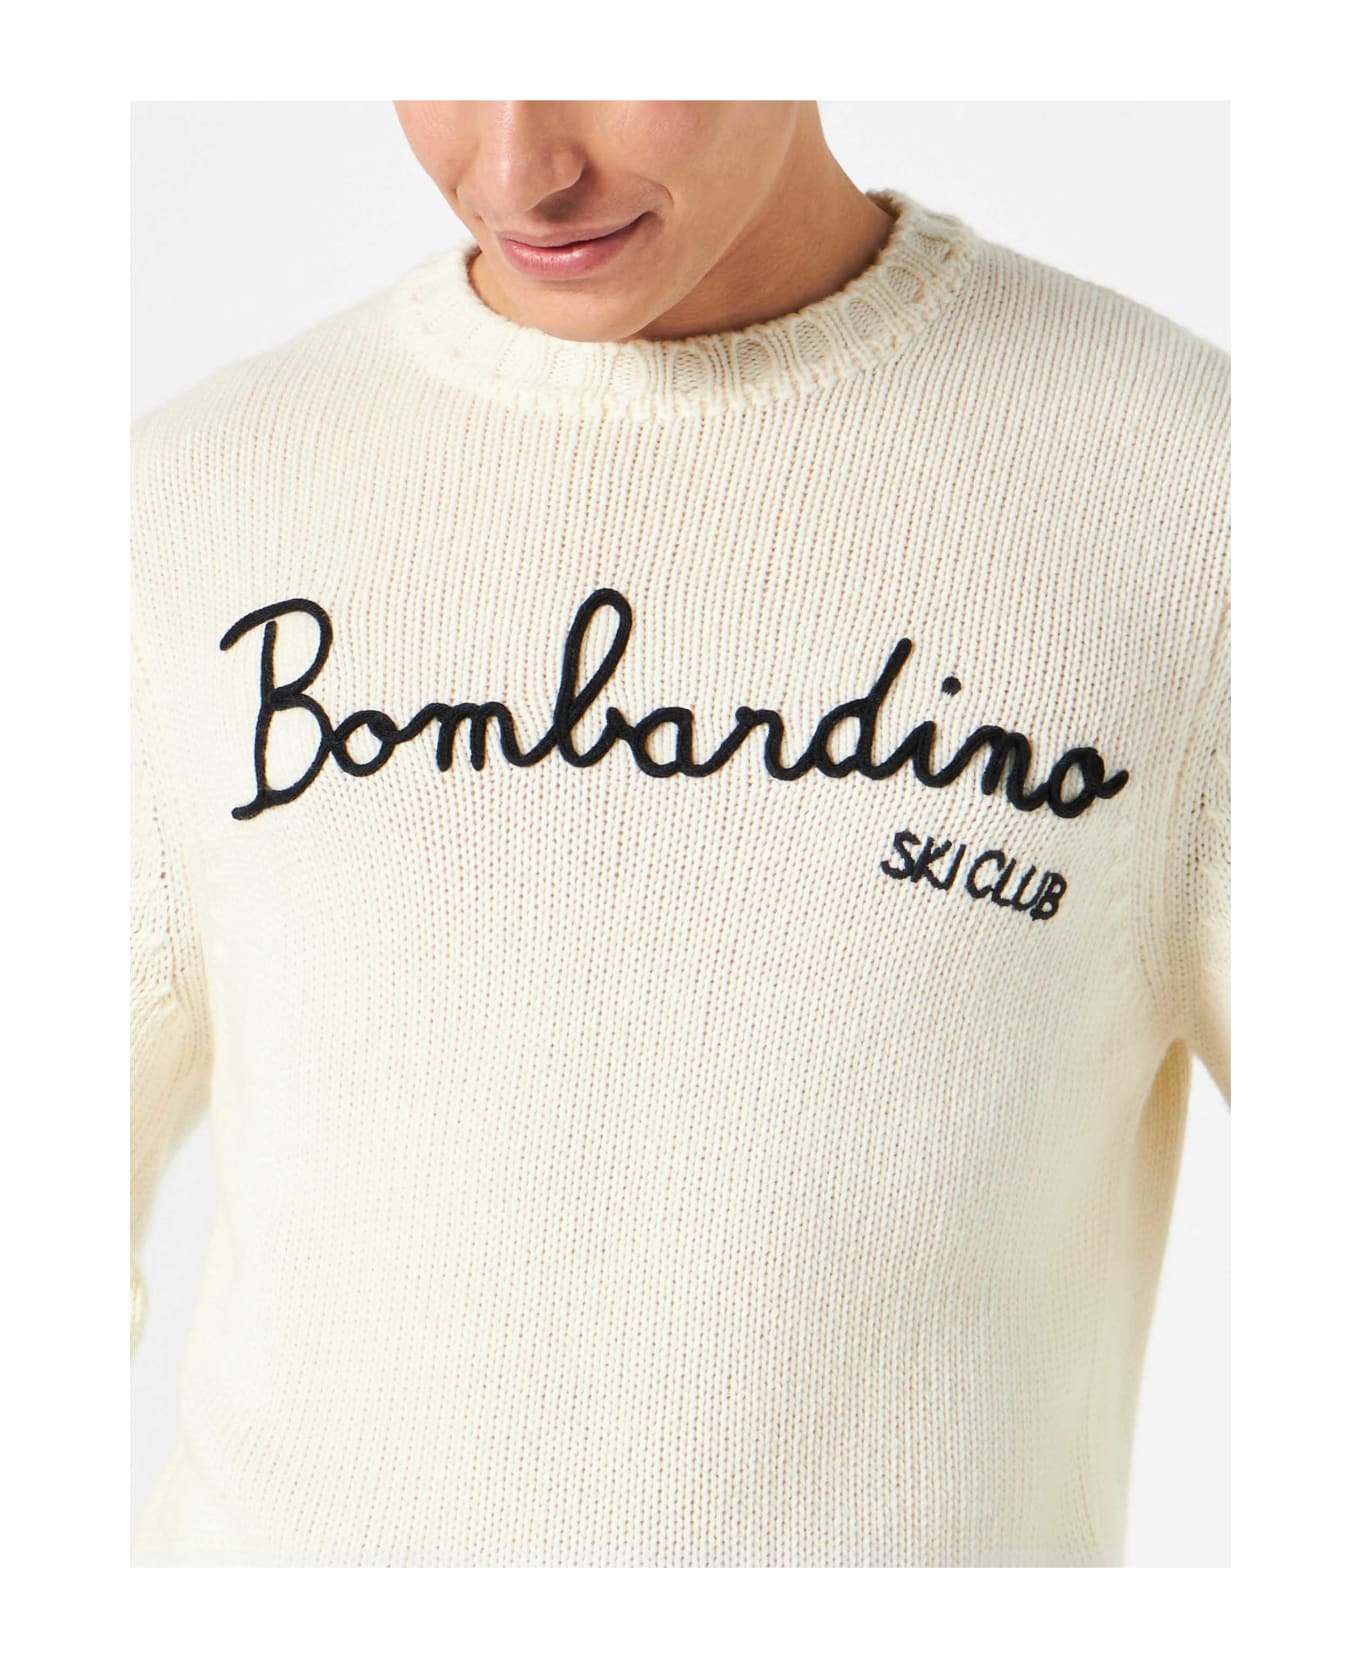 MC2 Saint Barth Bombardino Ski Club Blended Cashmere Sweater - WHITE